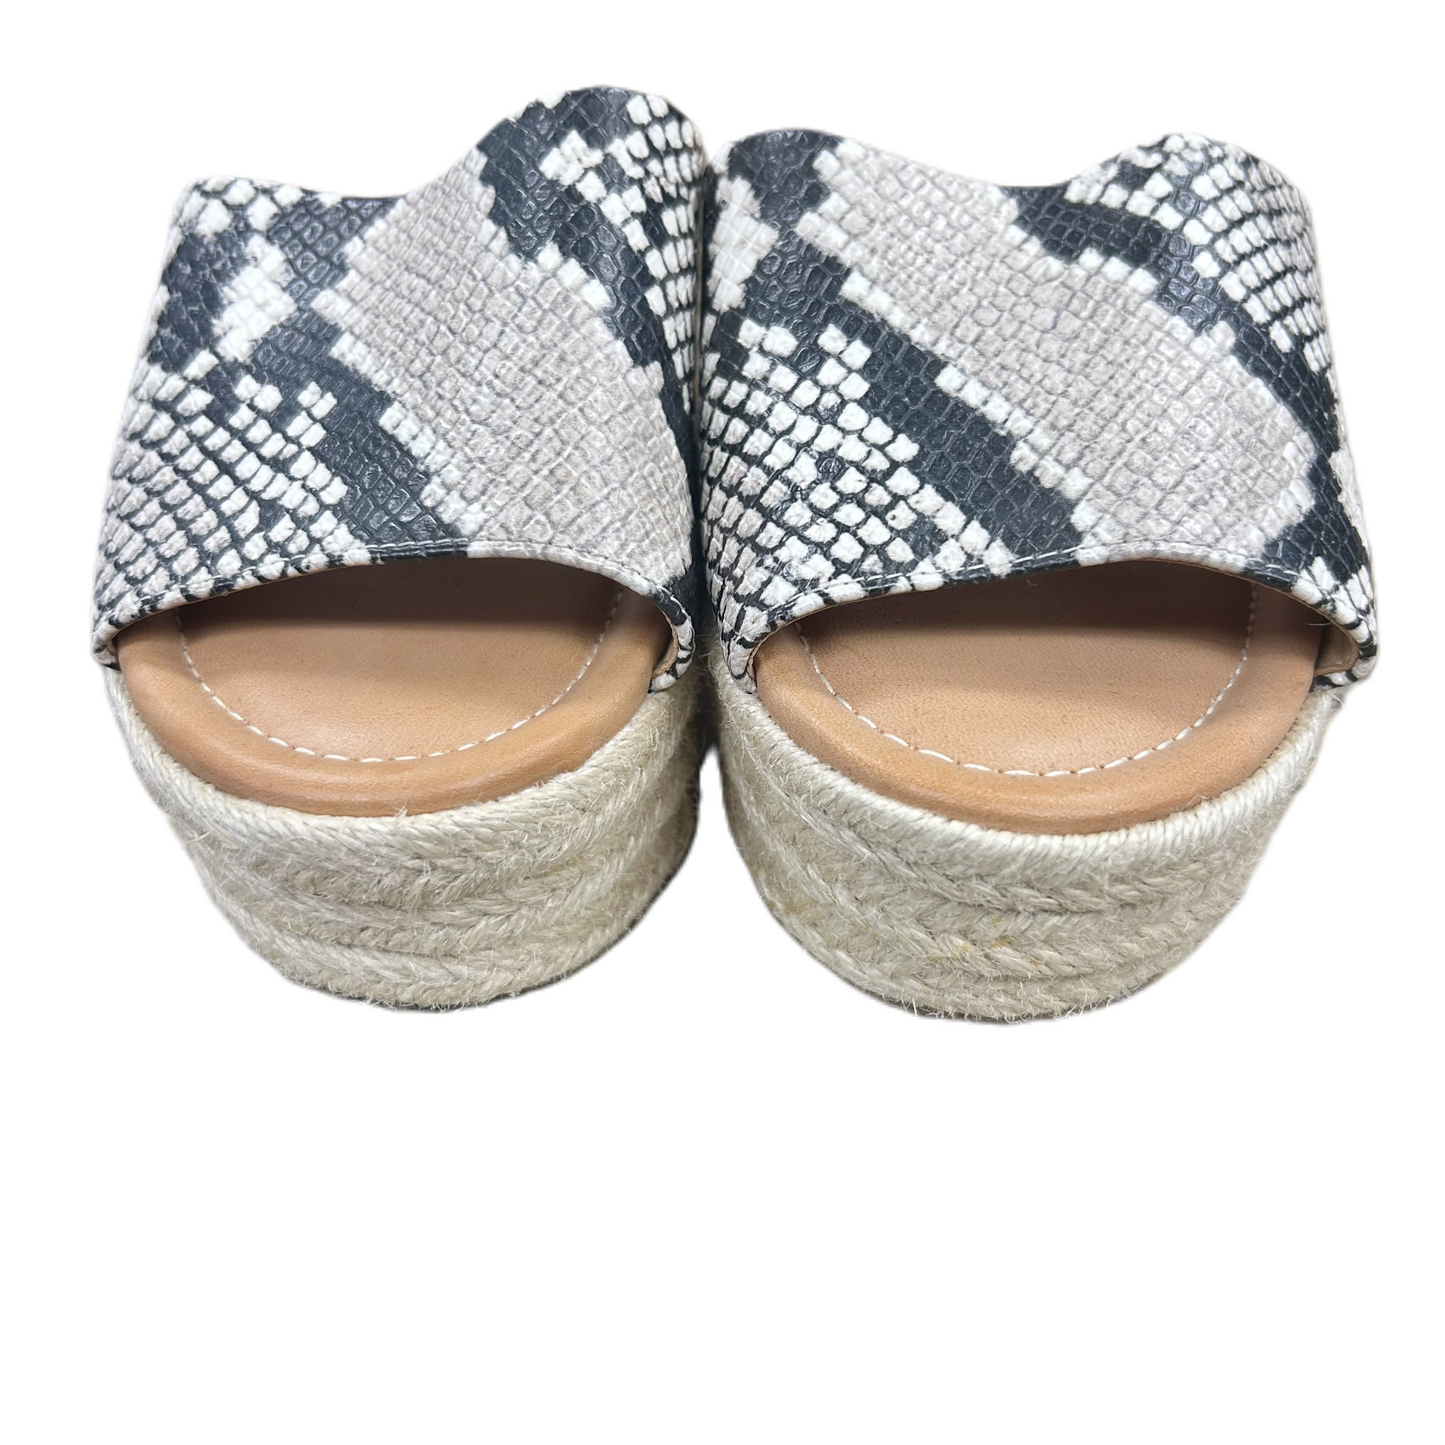 Snakeskin Print Sandals Heels Wedge By Nine West, Size: 8